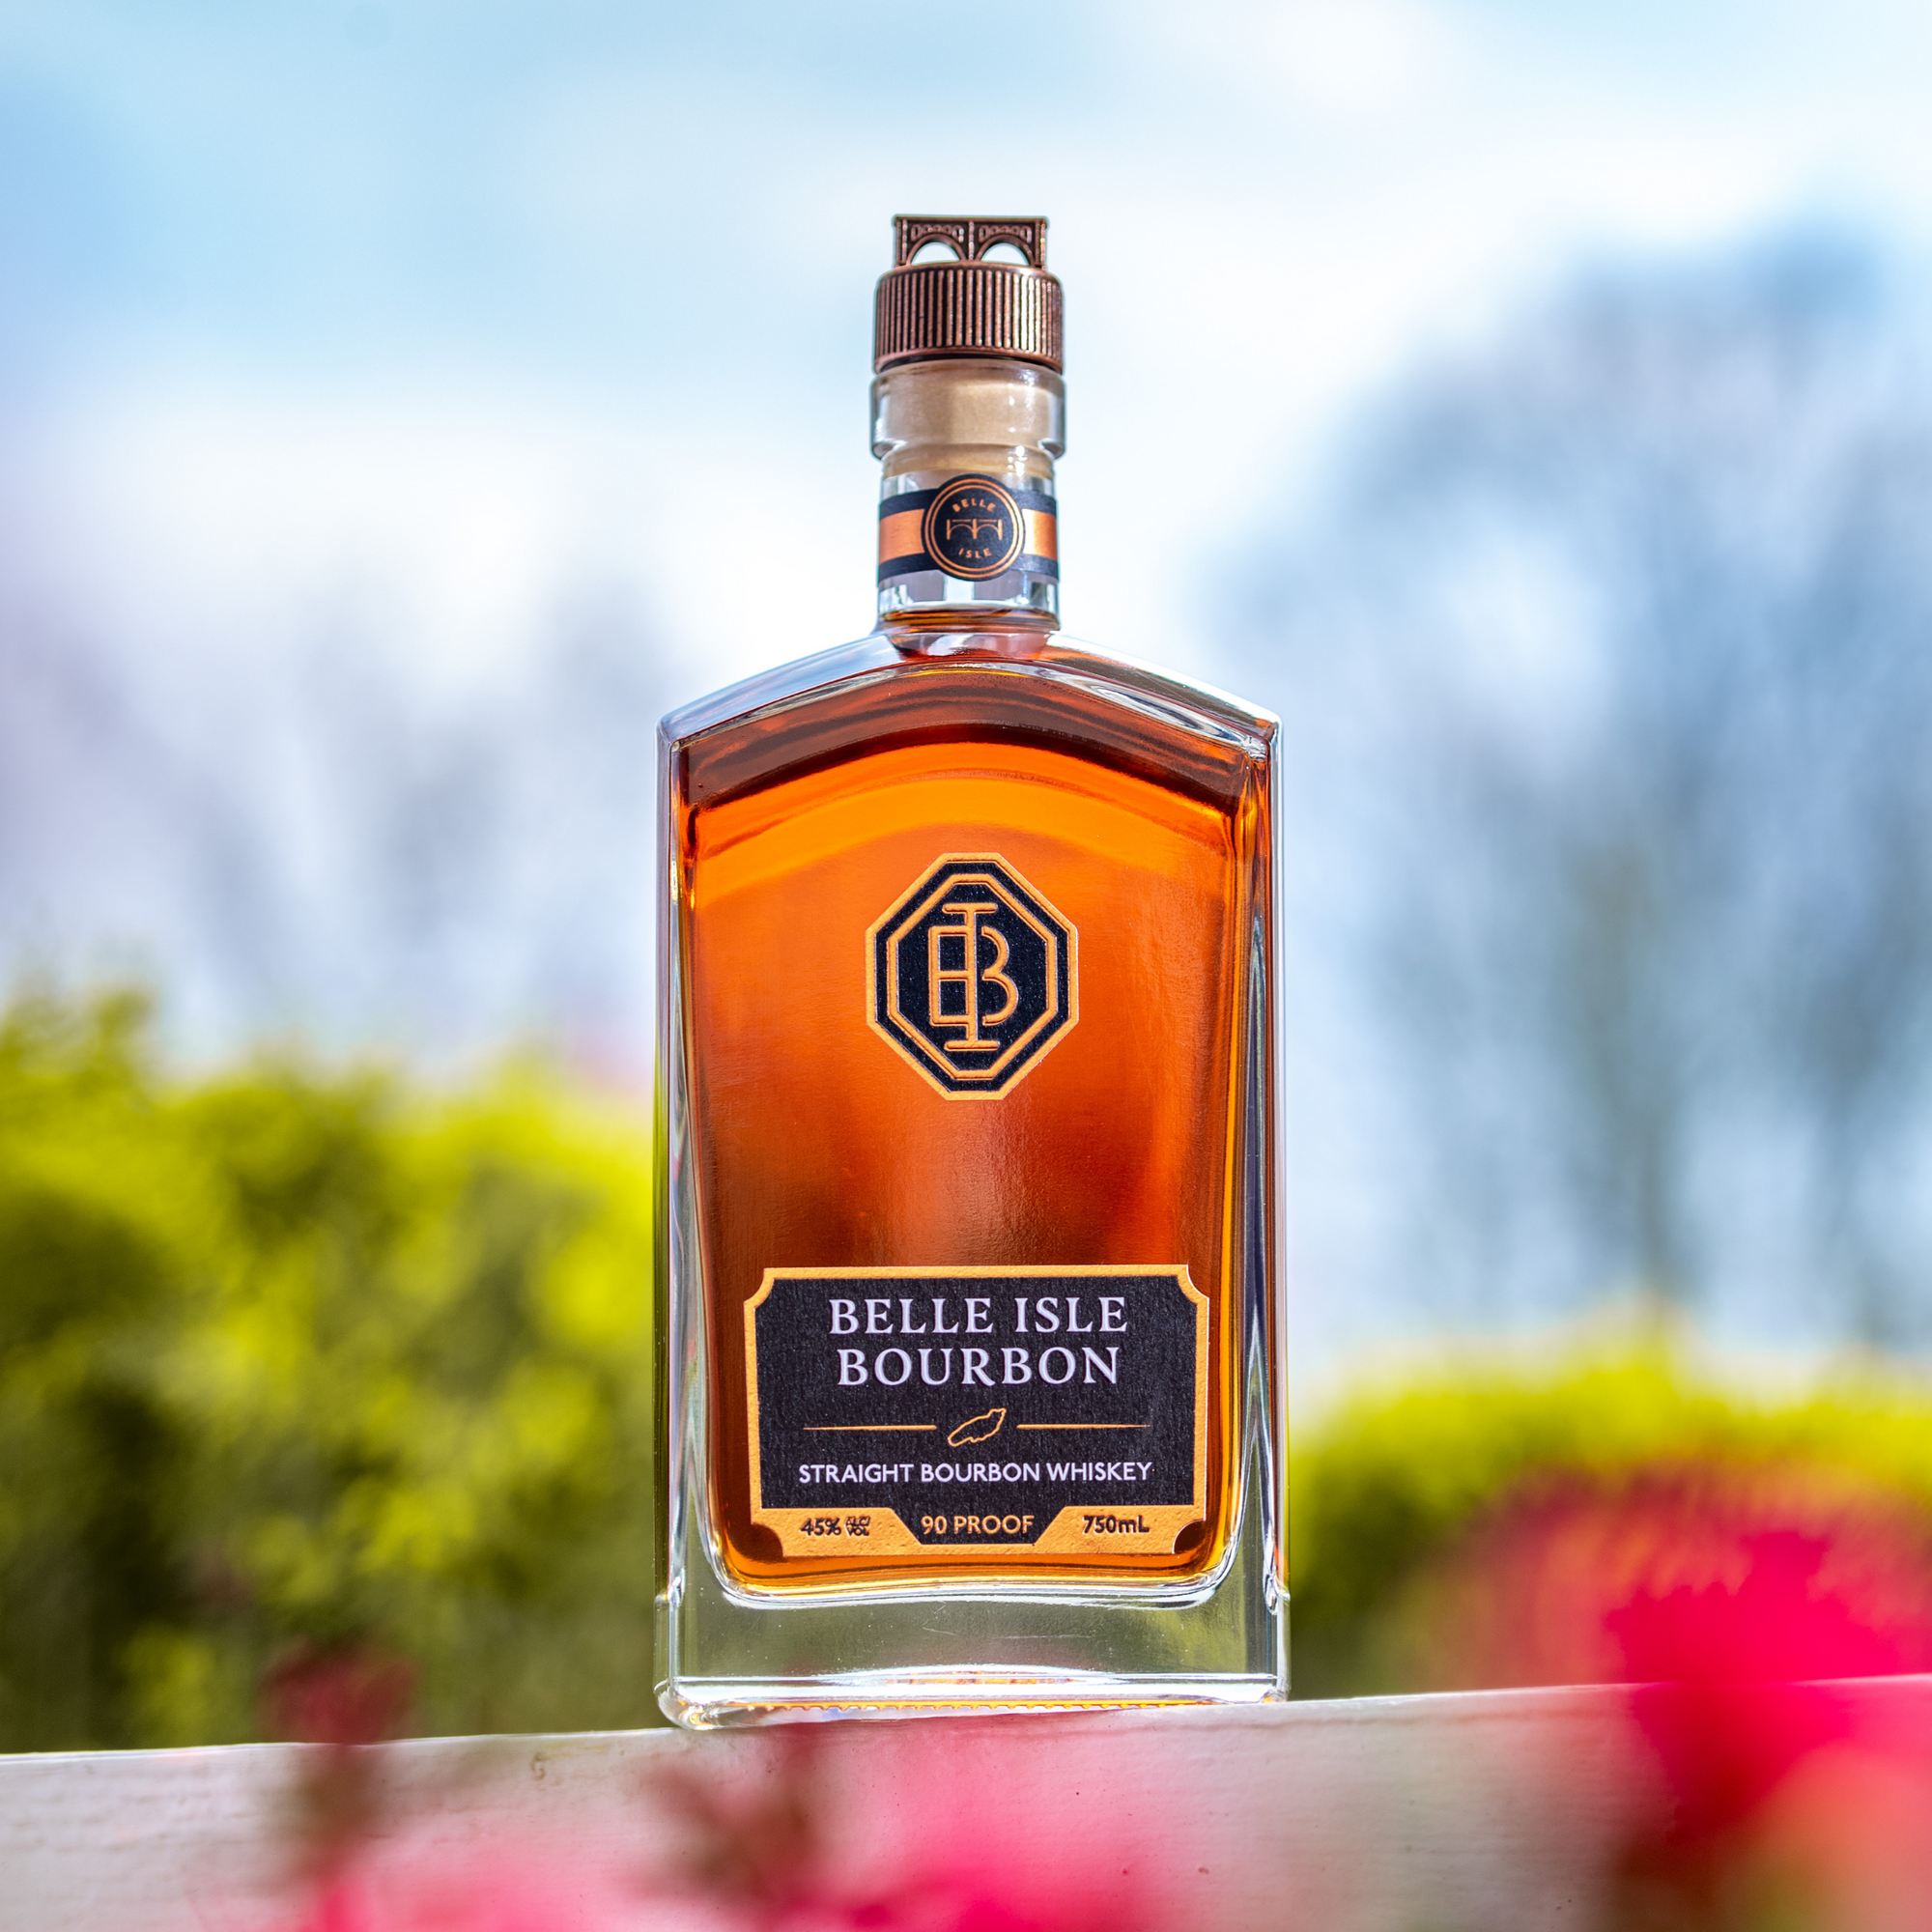 Belle Isle Bourbon - Straight Bourbon Whiskey